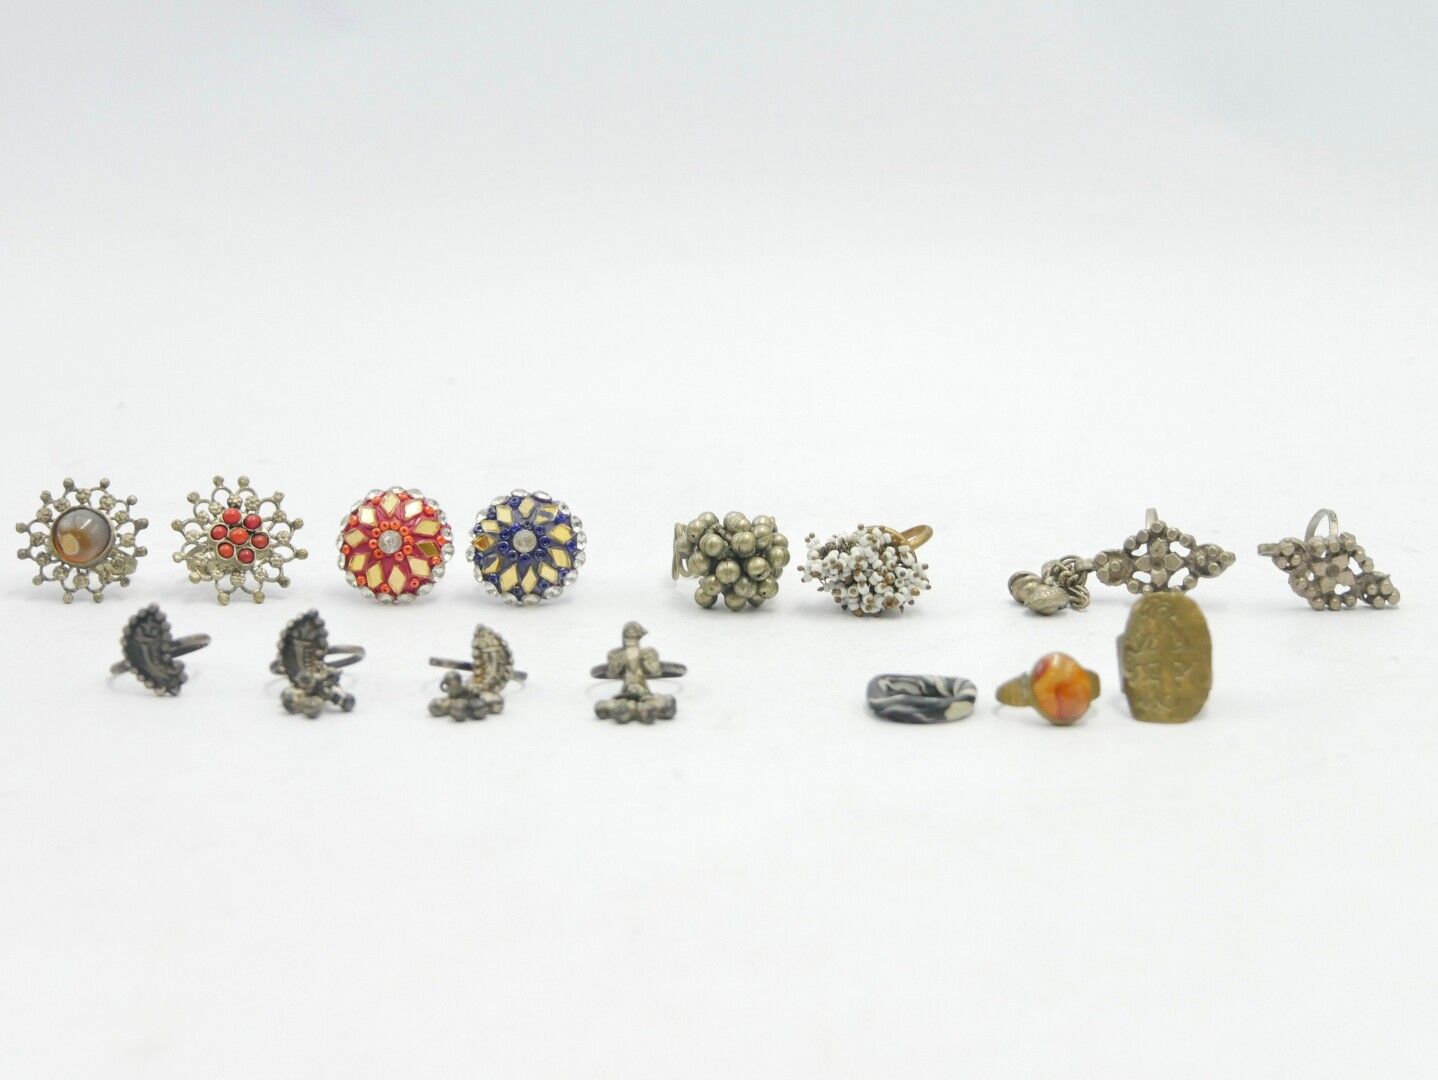 Null 印度和亚洲 - 20世纪

一批15个金属、珍珠和树脂戒指

各种手指尺寸

氧化、使用状态、部件缺失